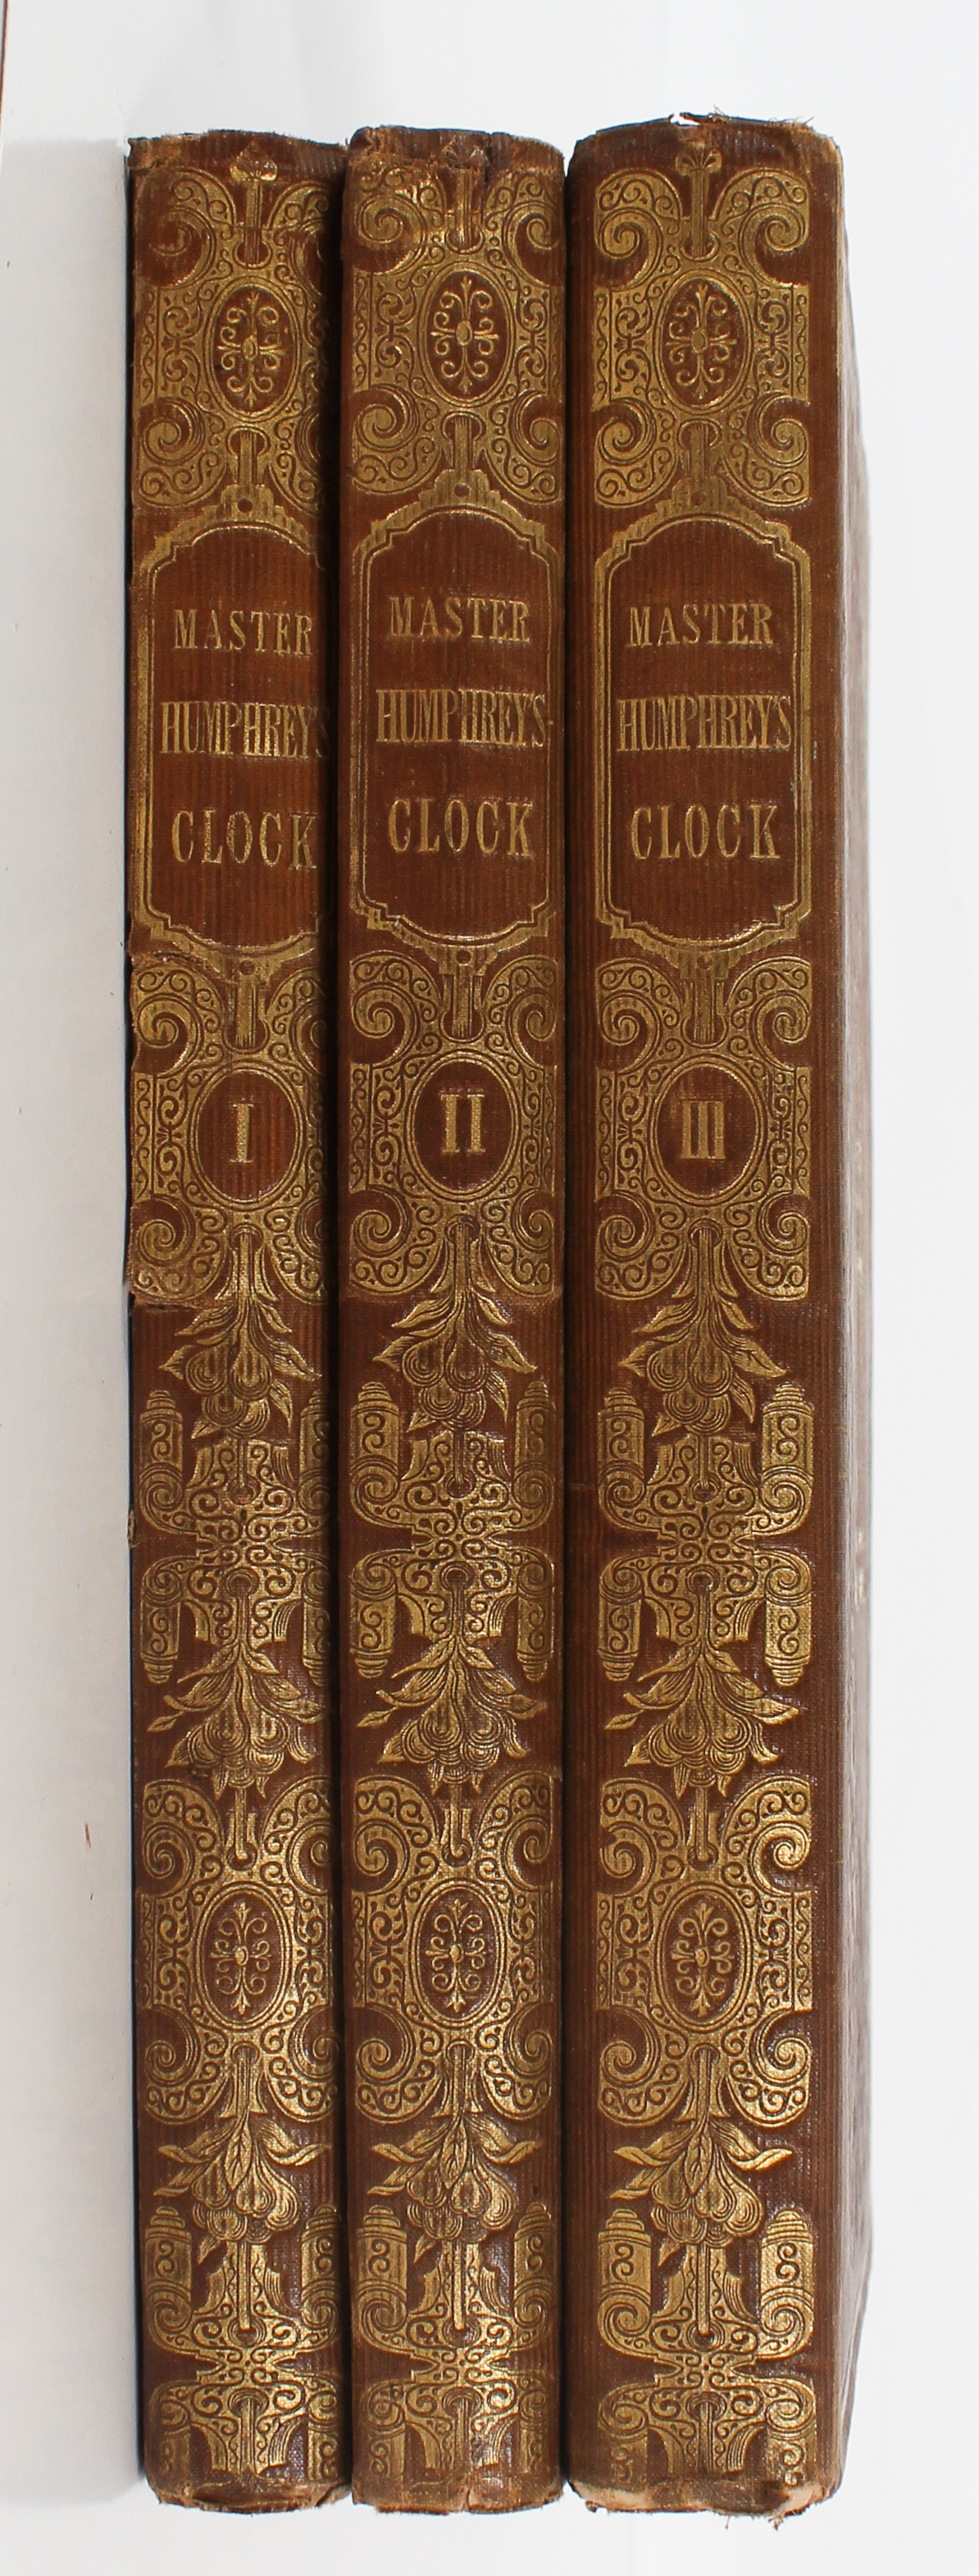 Dickens, Master Humphrey's Clock, 1st Ed 1840-41